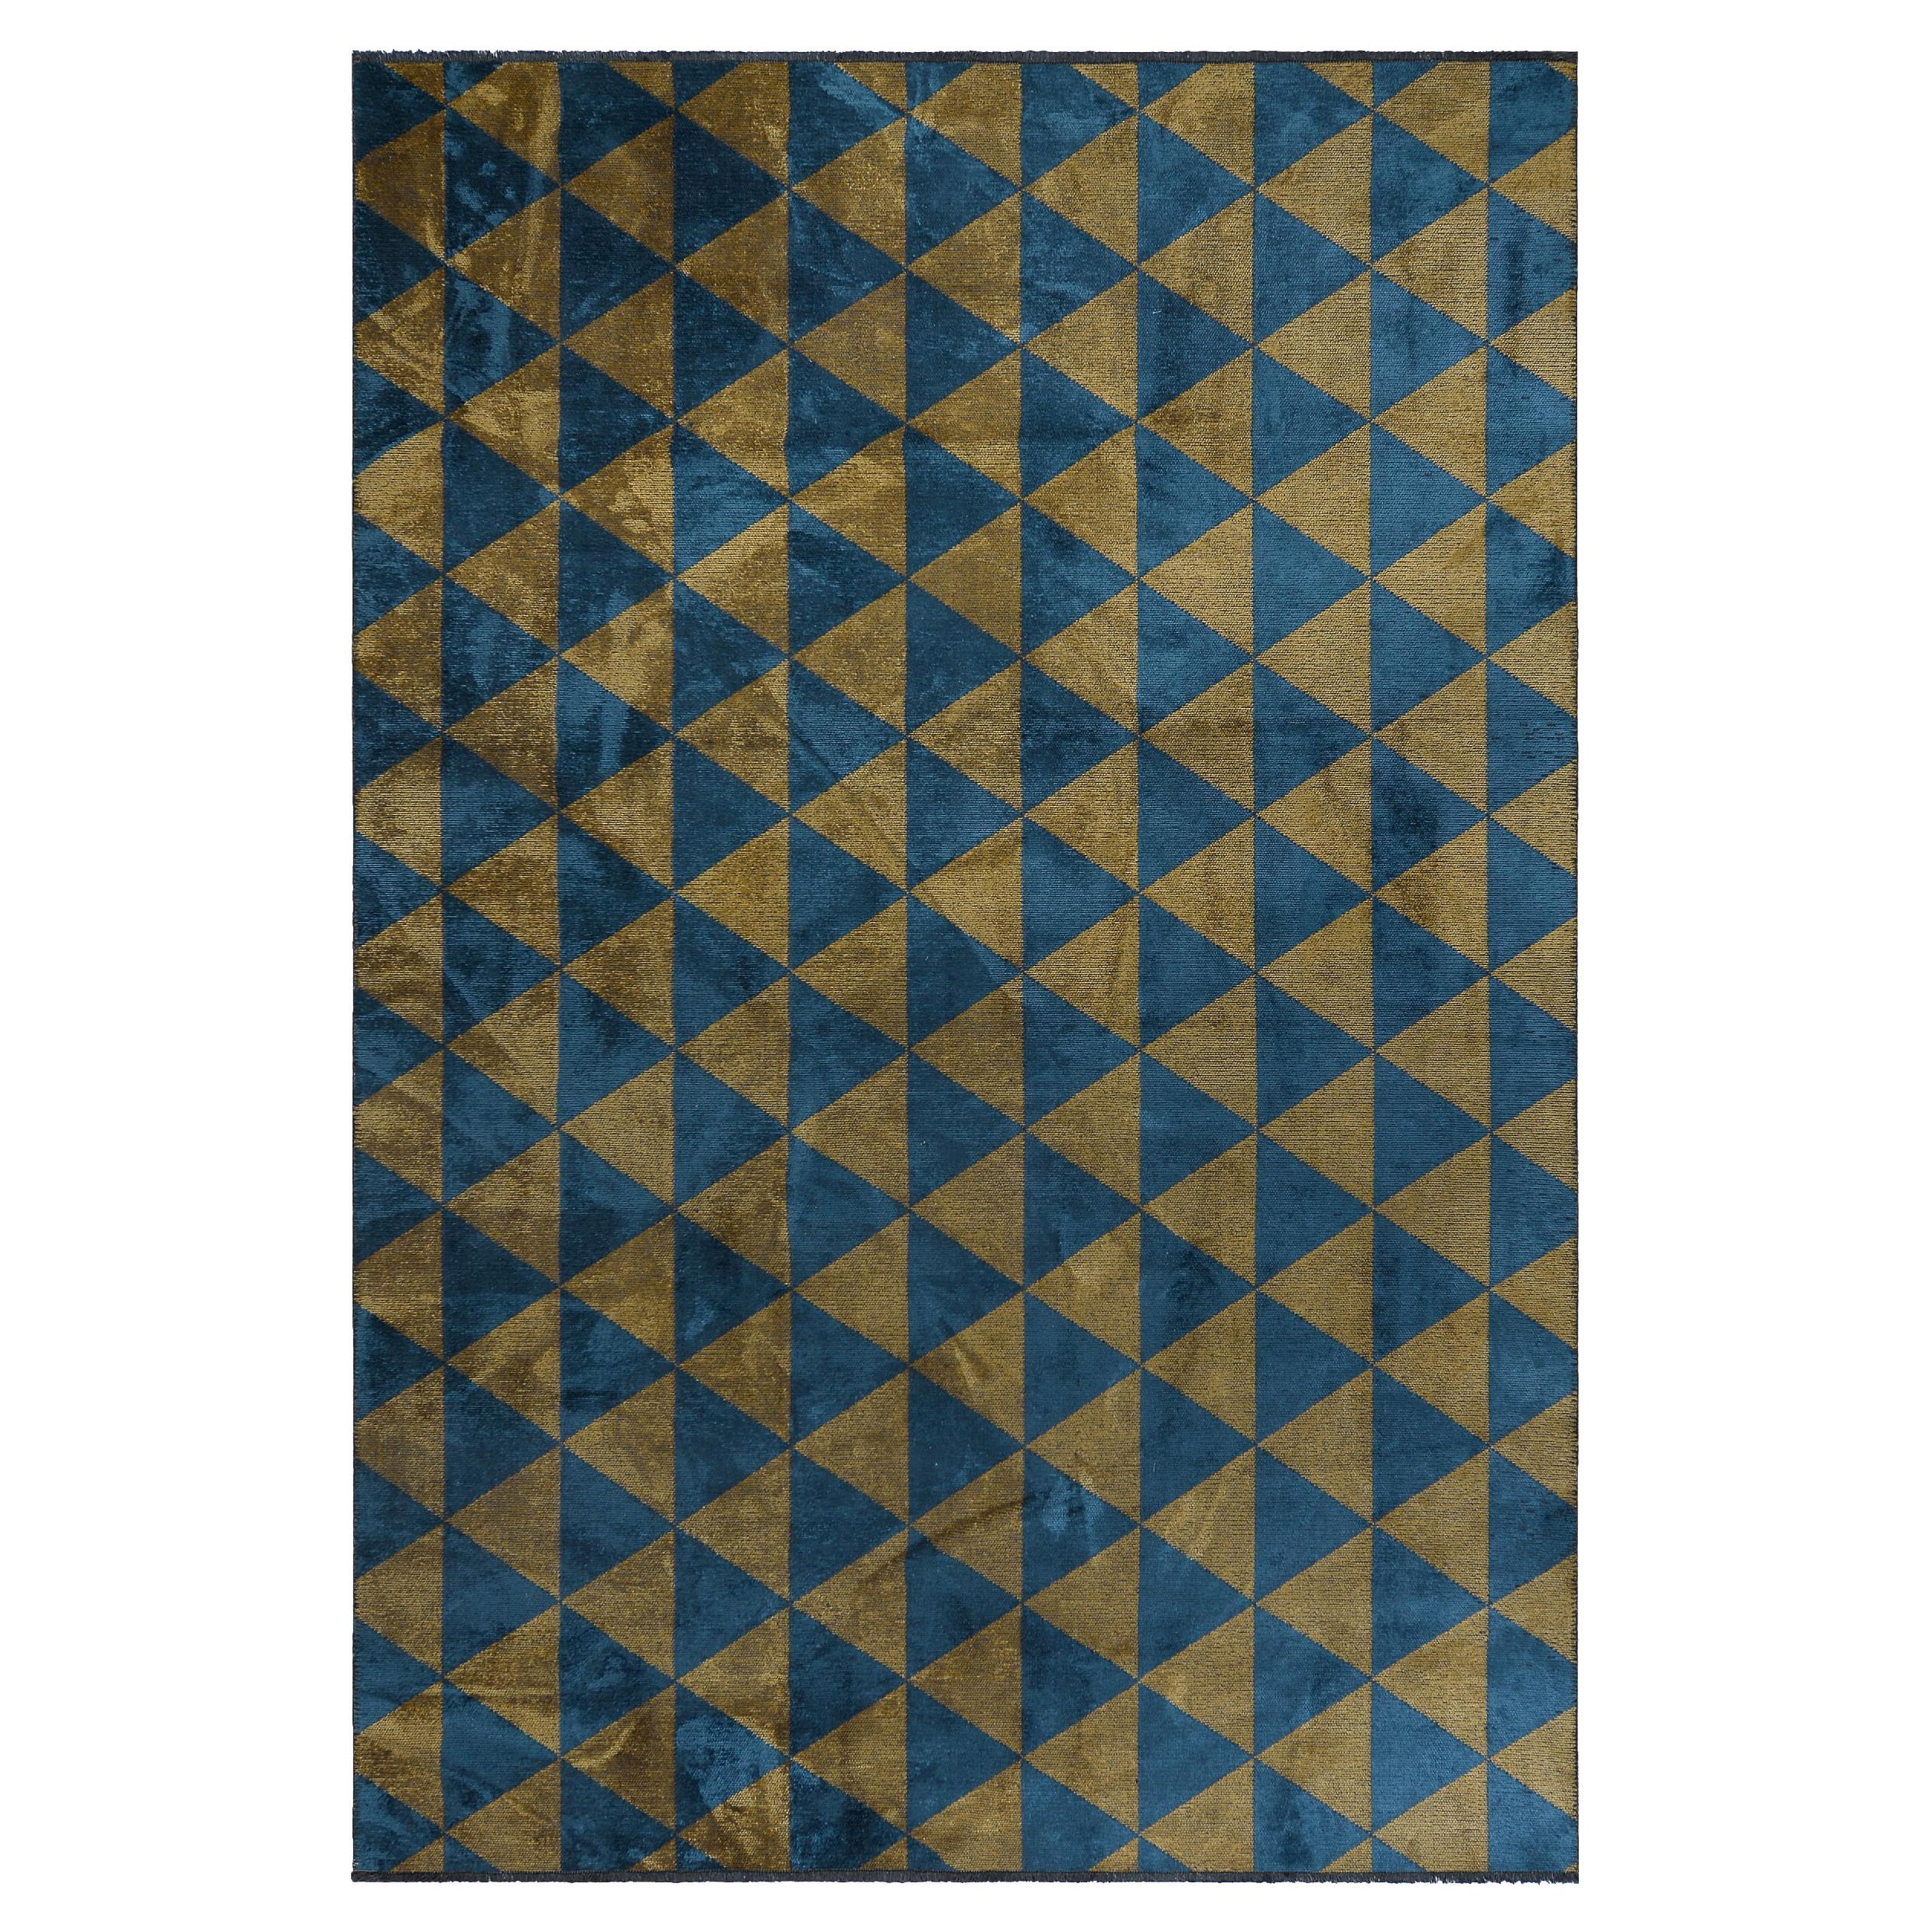 For Sale:  (Blue) Modern  Geometric Luxury Area Rug